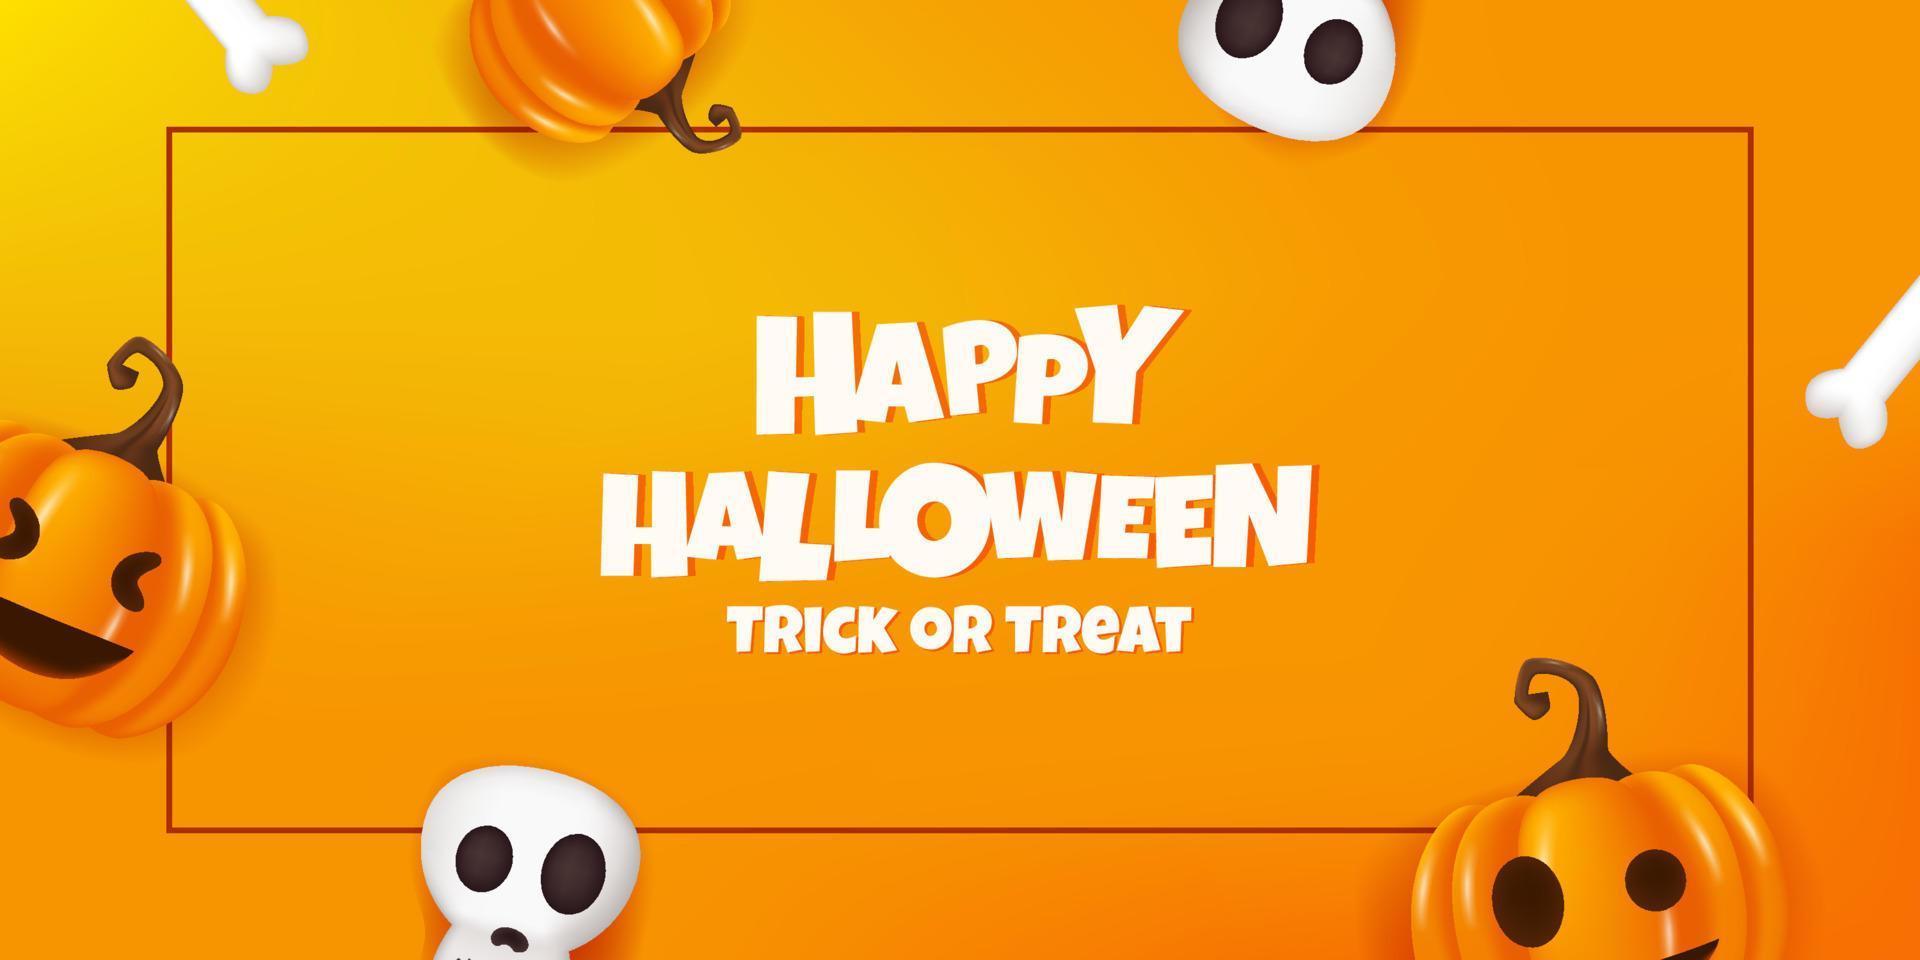 Happy halloween banner template with skull, pumpkin, jack o lantern illustration vector